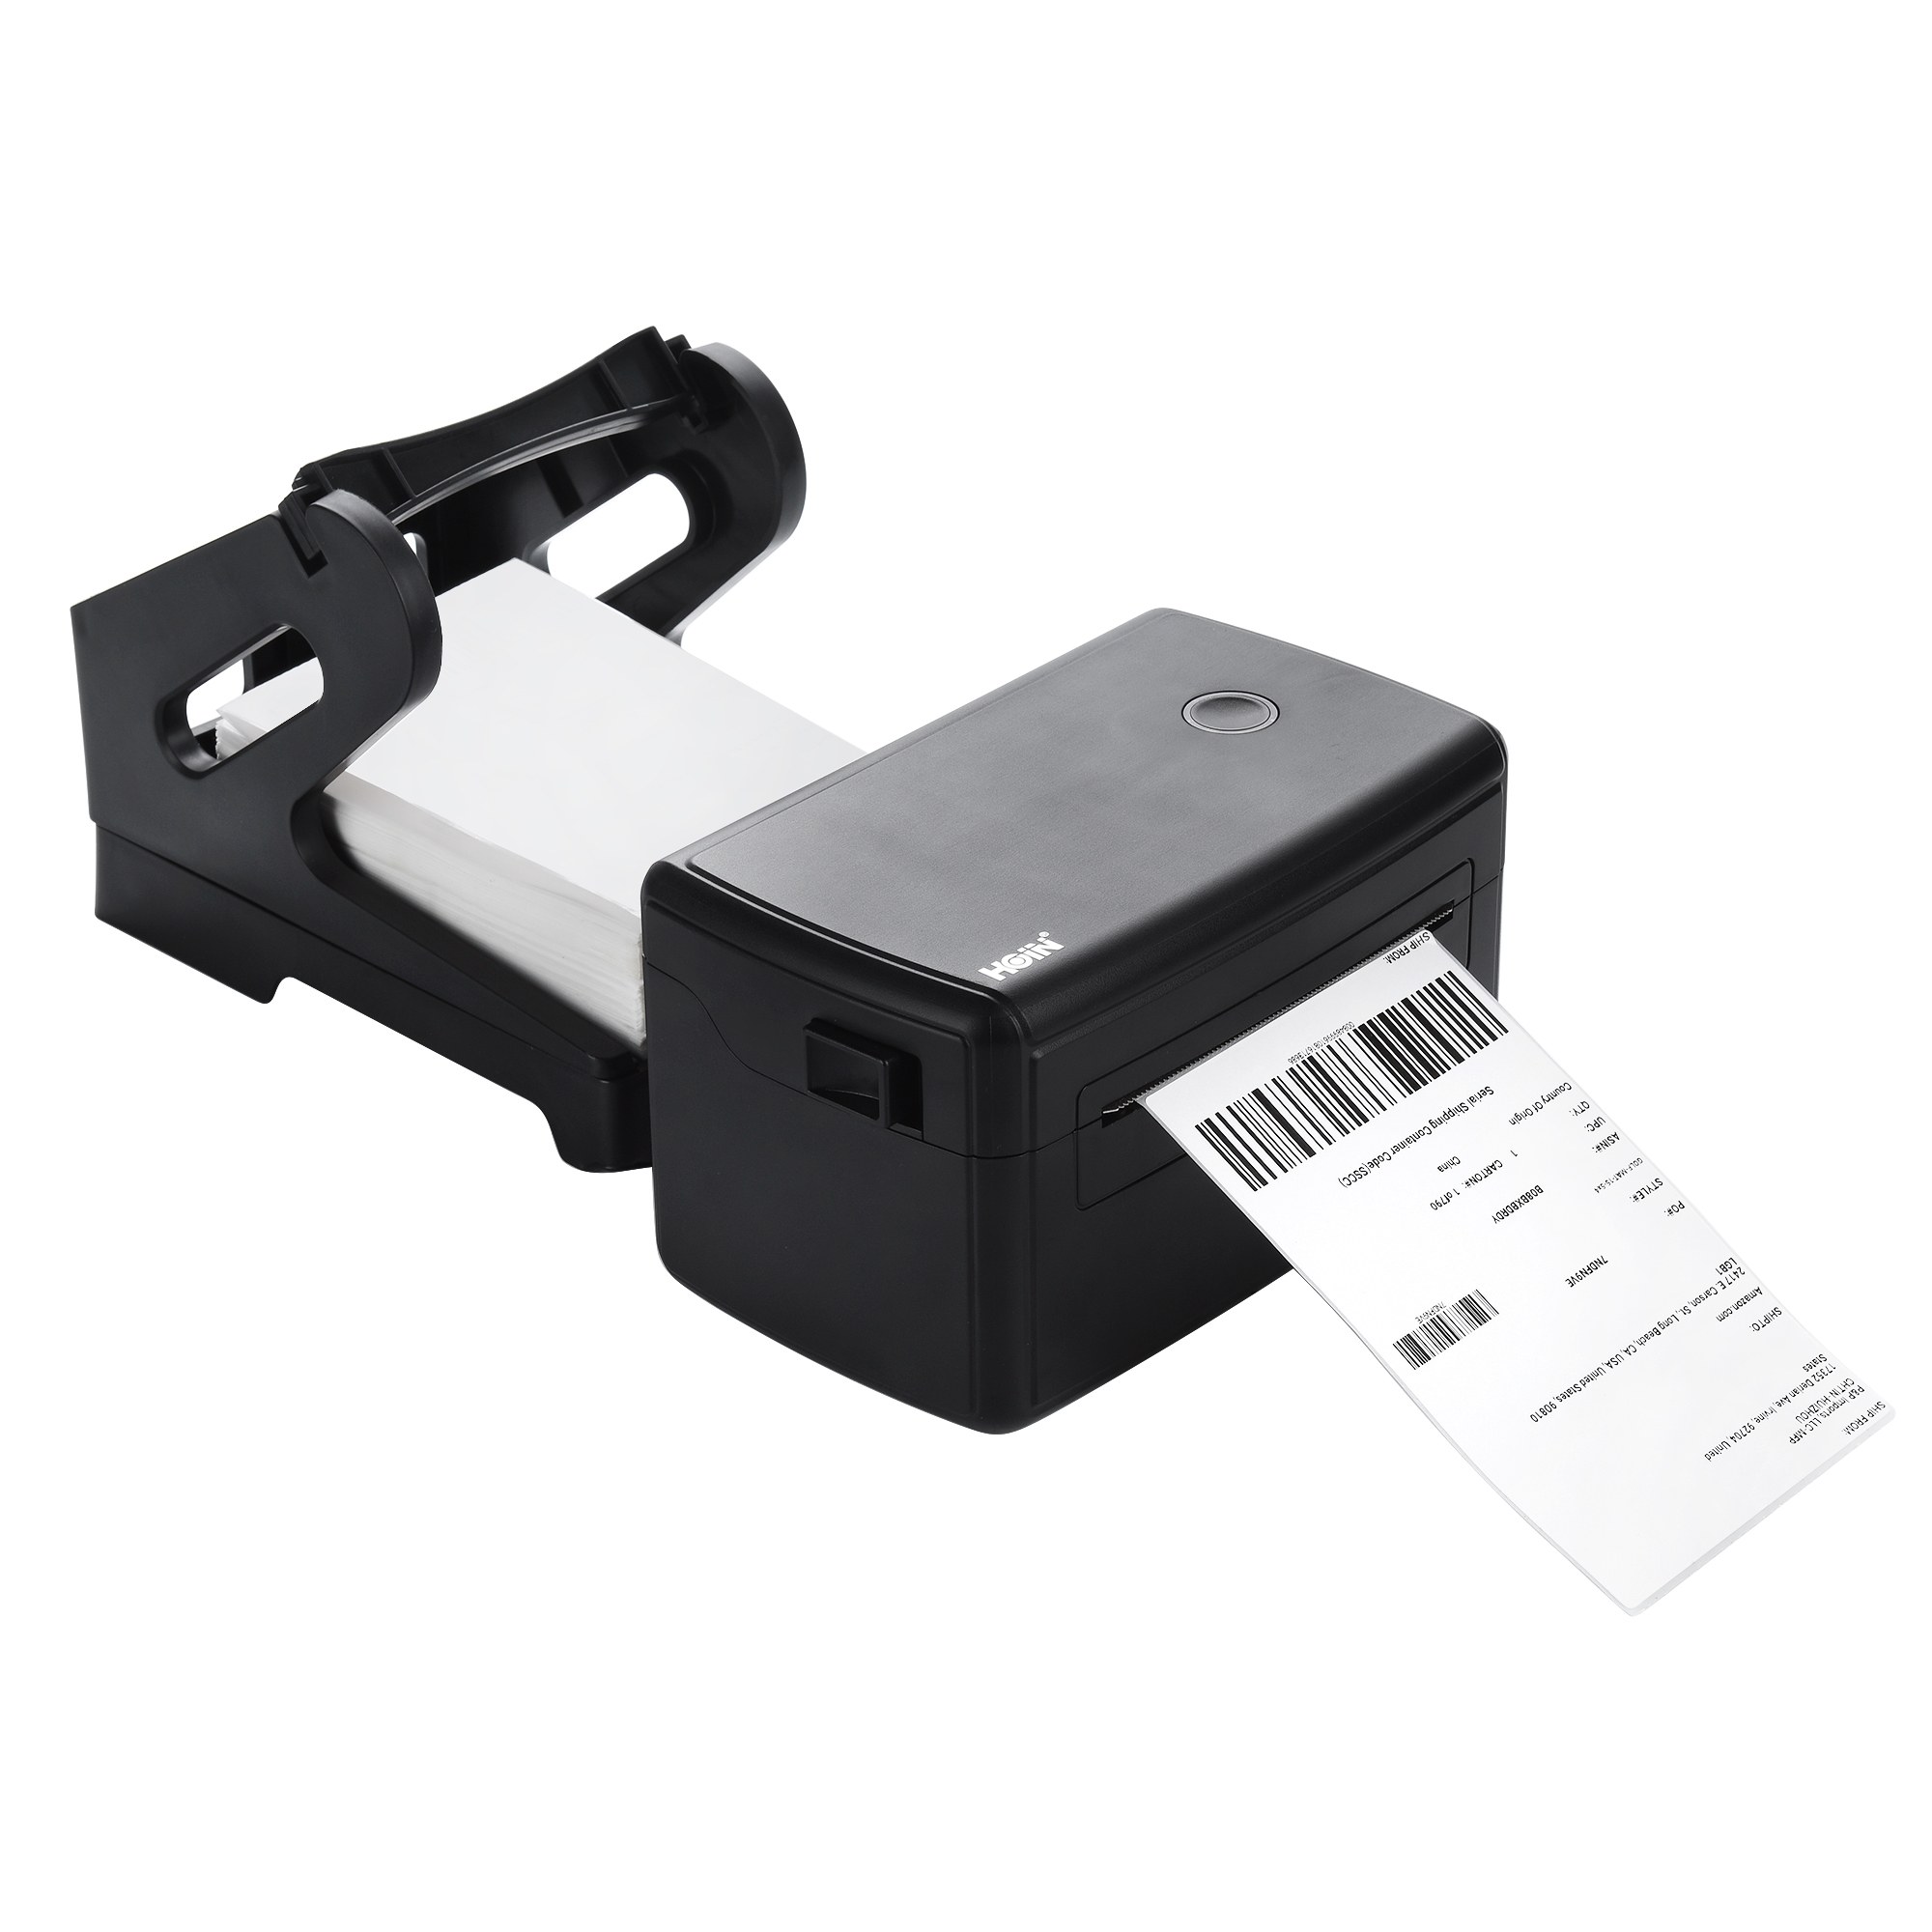 HOIN - Stampante per etichette adesive 80mm Stampante termica per